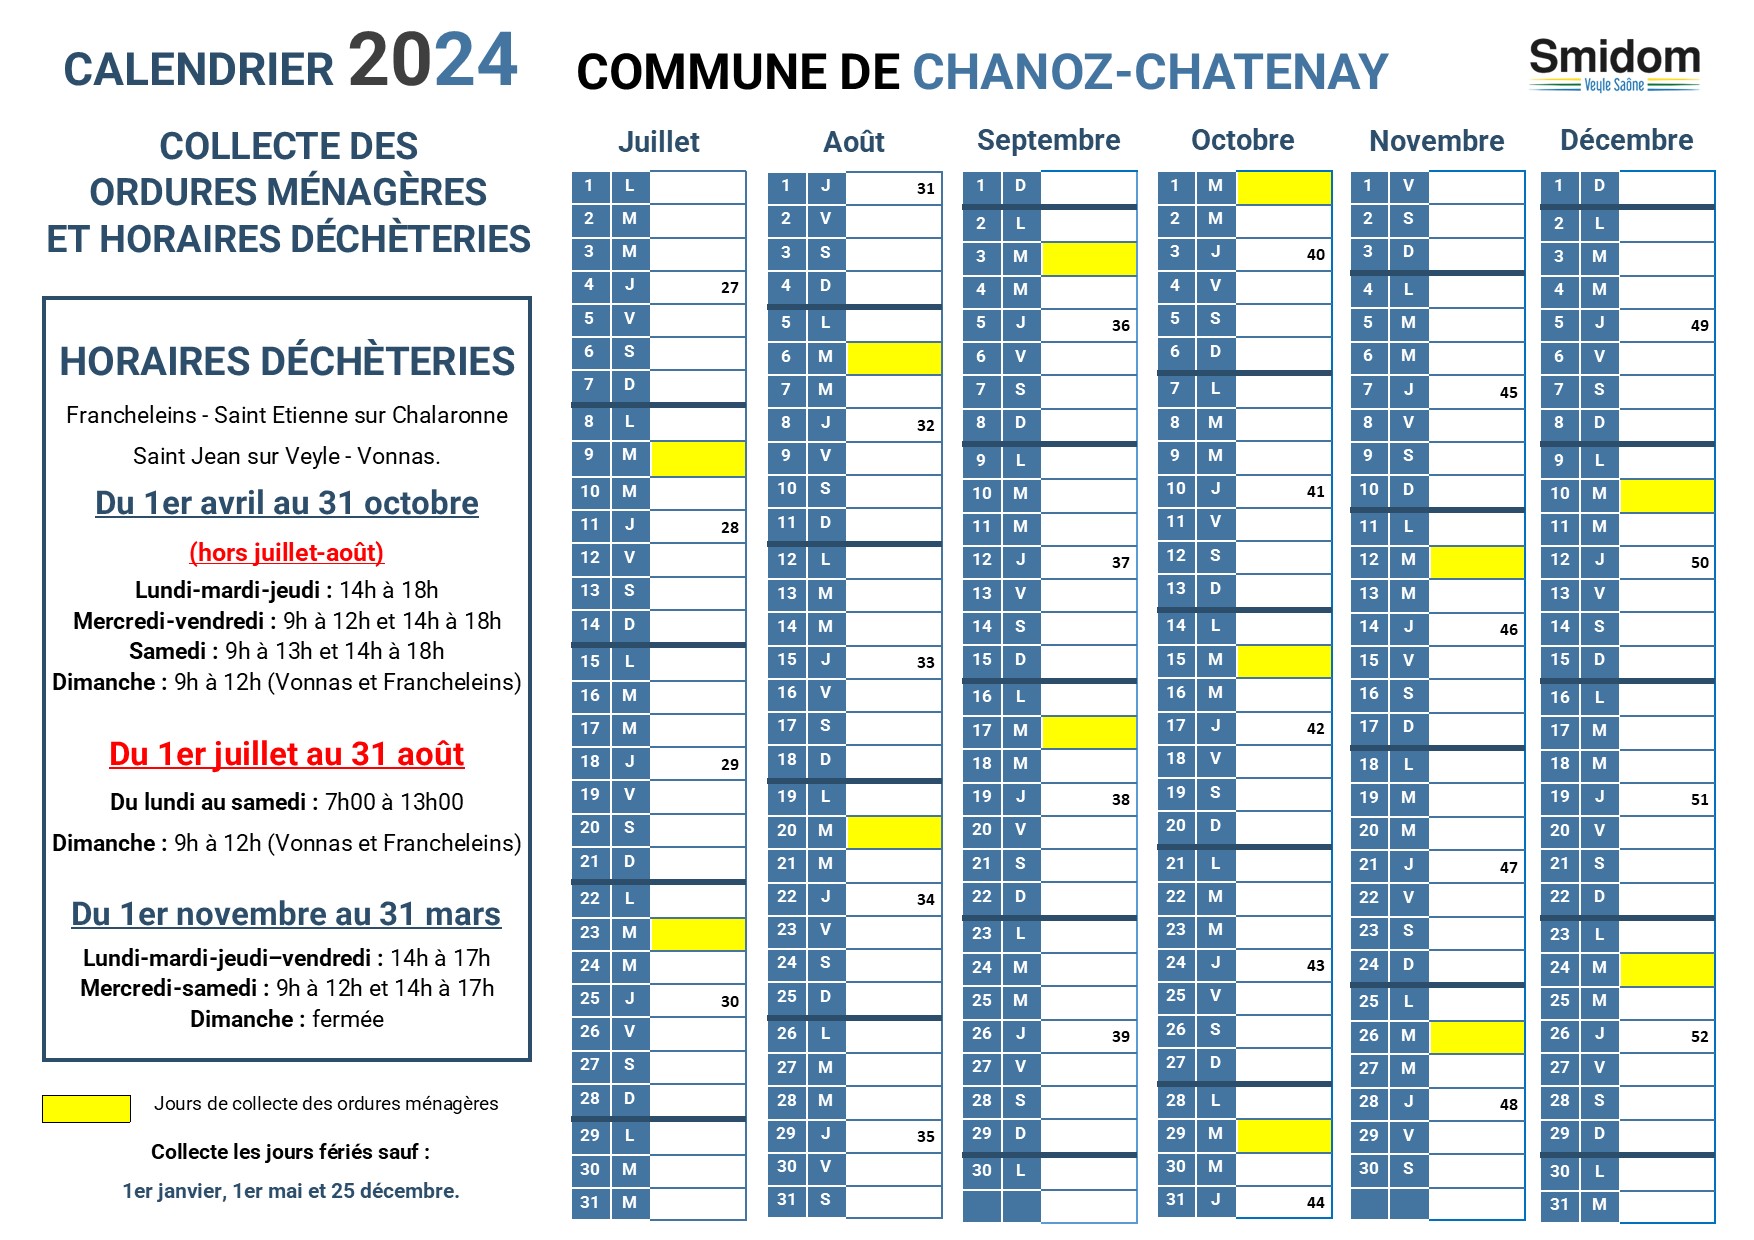 CHANOZ CHATENAY - Calendrier 2024 - 2.jpg